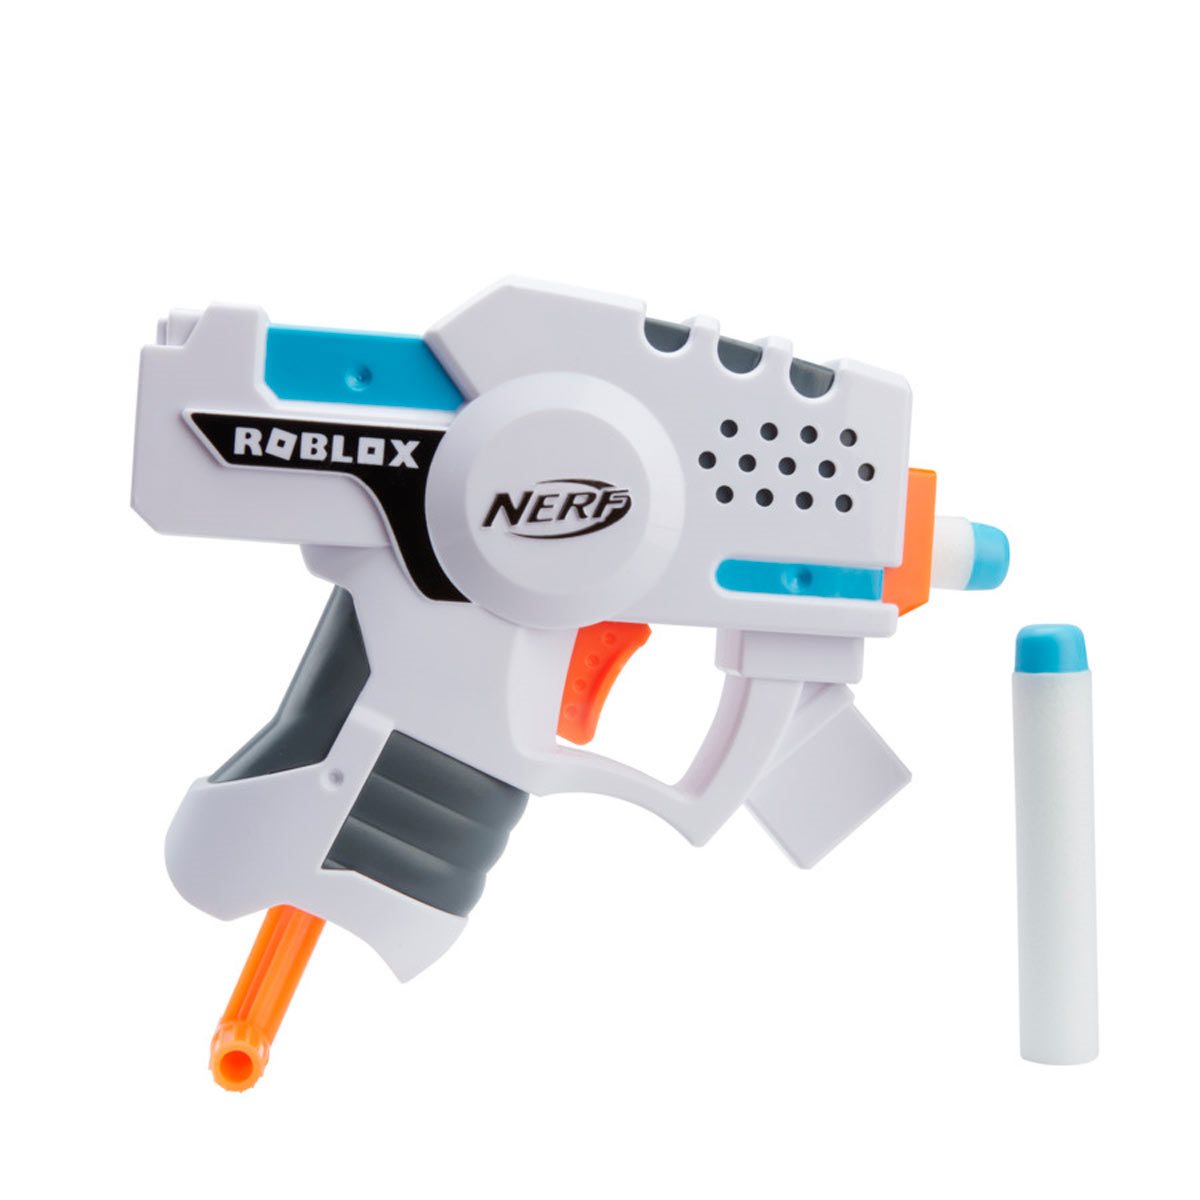 NERF Roblox Arsenal Pulse Laser Motorized Dart Blaster Gun + Virtual Item  NEW